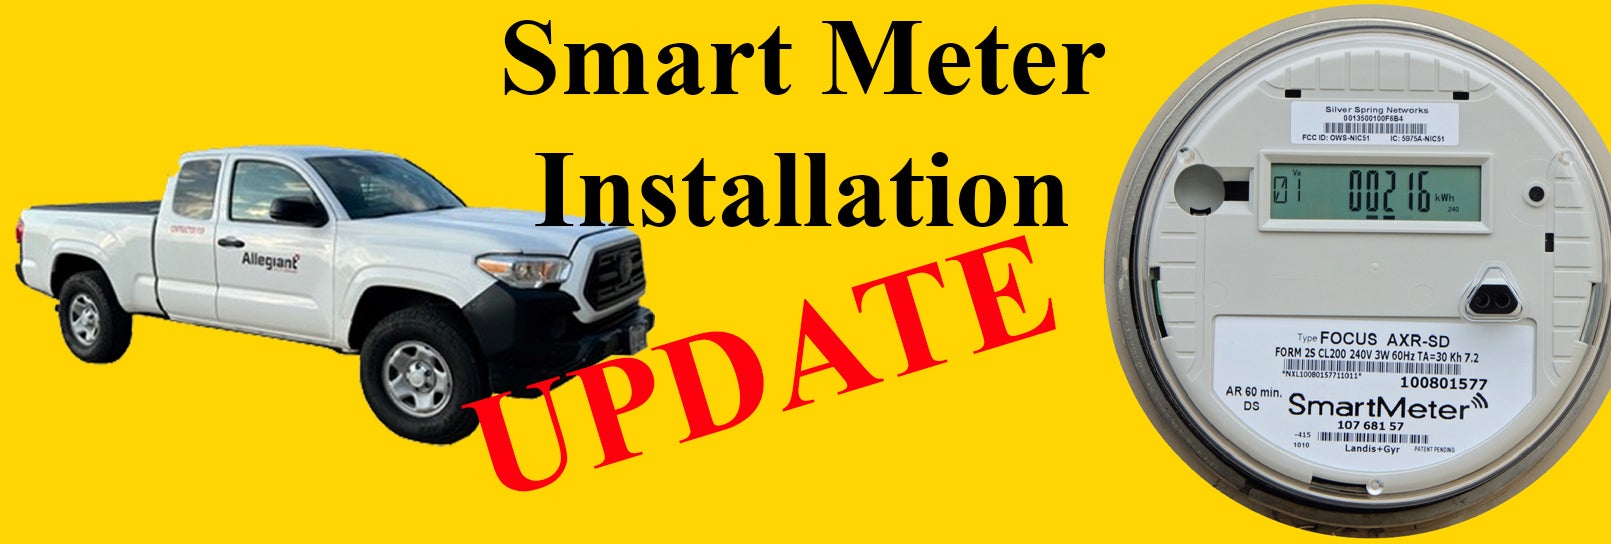 Smart Meter Installation Update